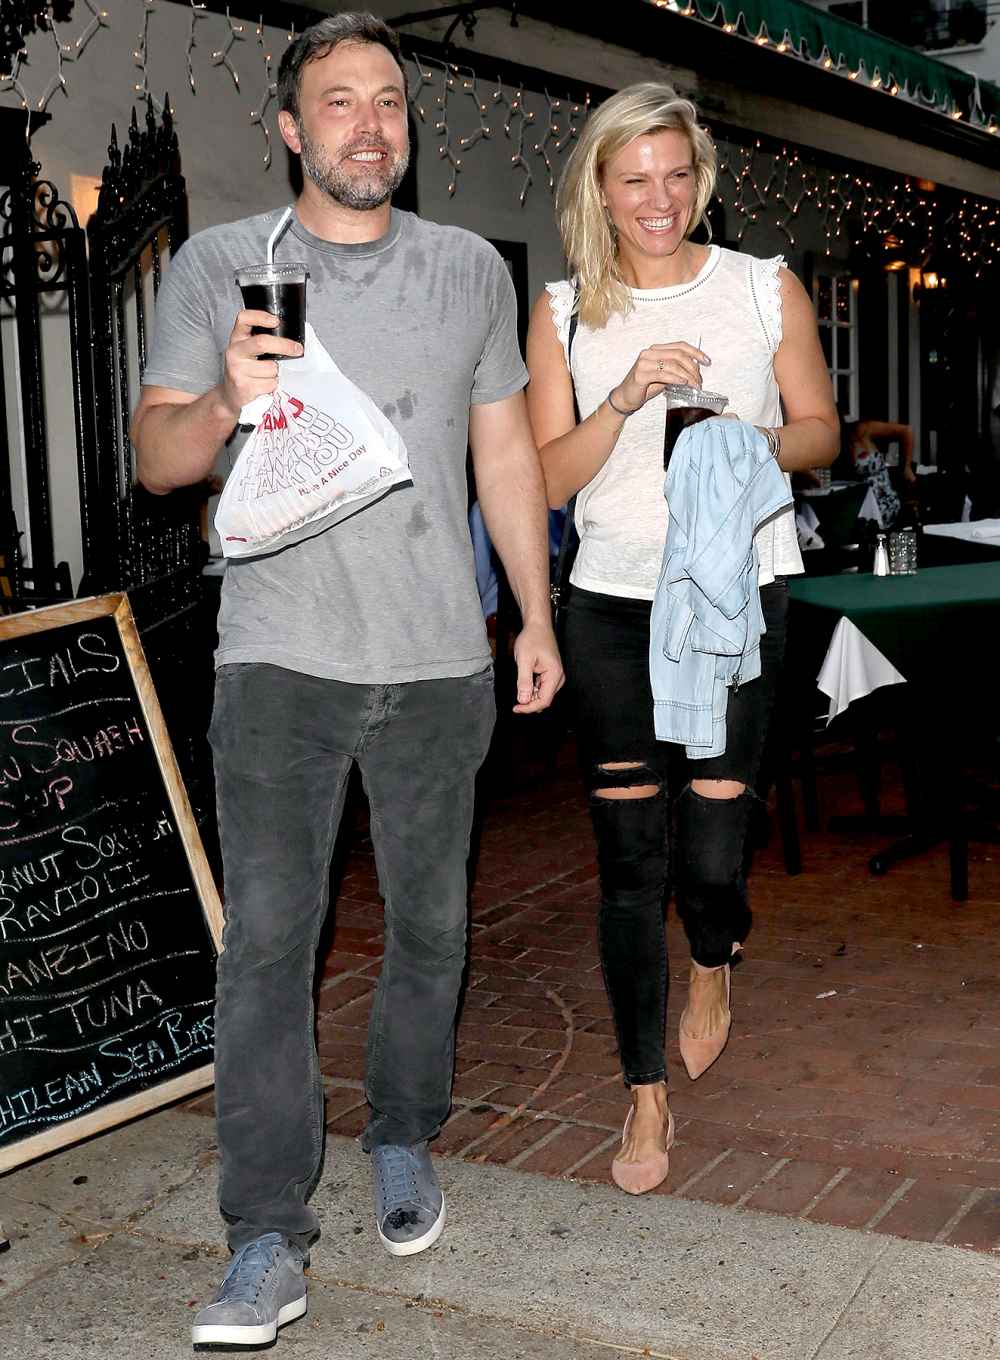 Ben Affleck exits the Beech Street Cafe restaurant after having some pizza with Lindsay Shookus on July 10, 2017.